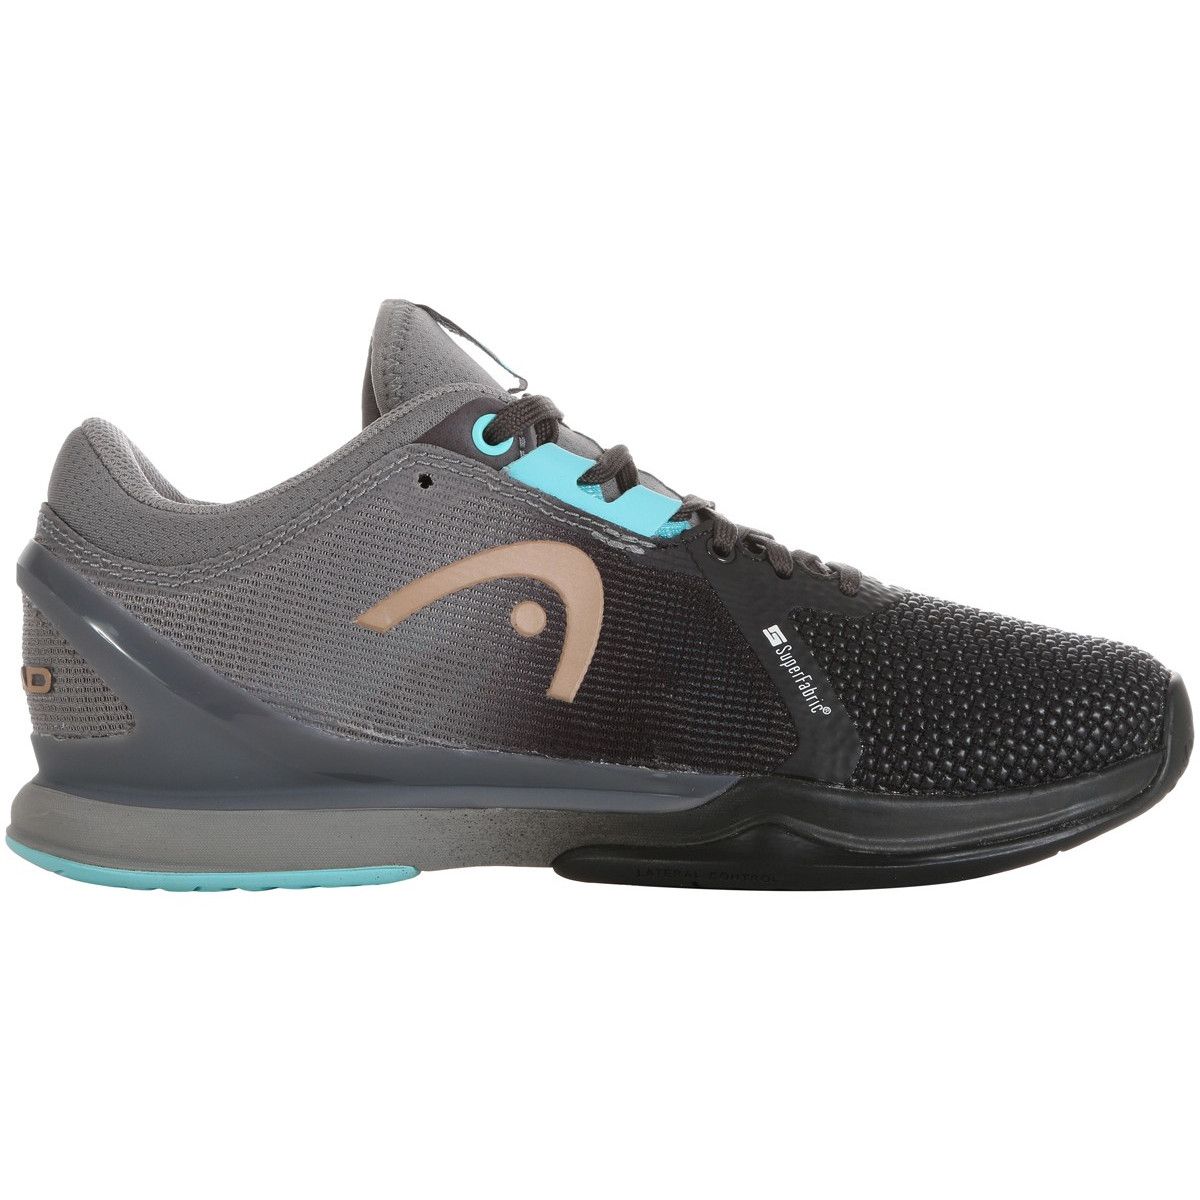 Head Sprint Pro 3.0 SF Women's Tennis Shoes 274960